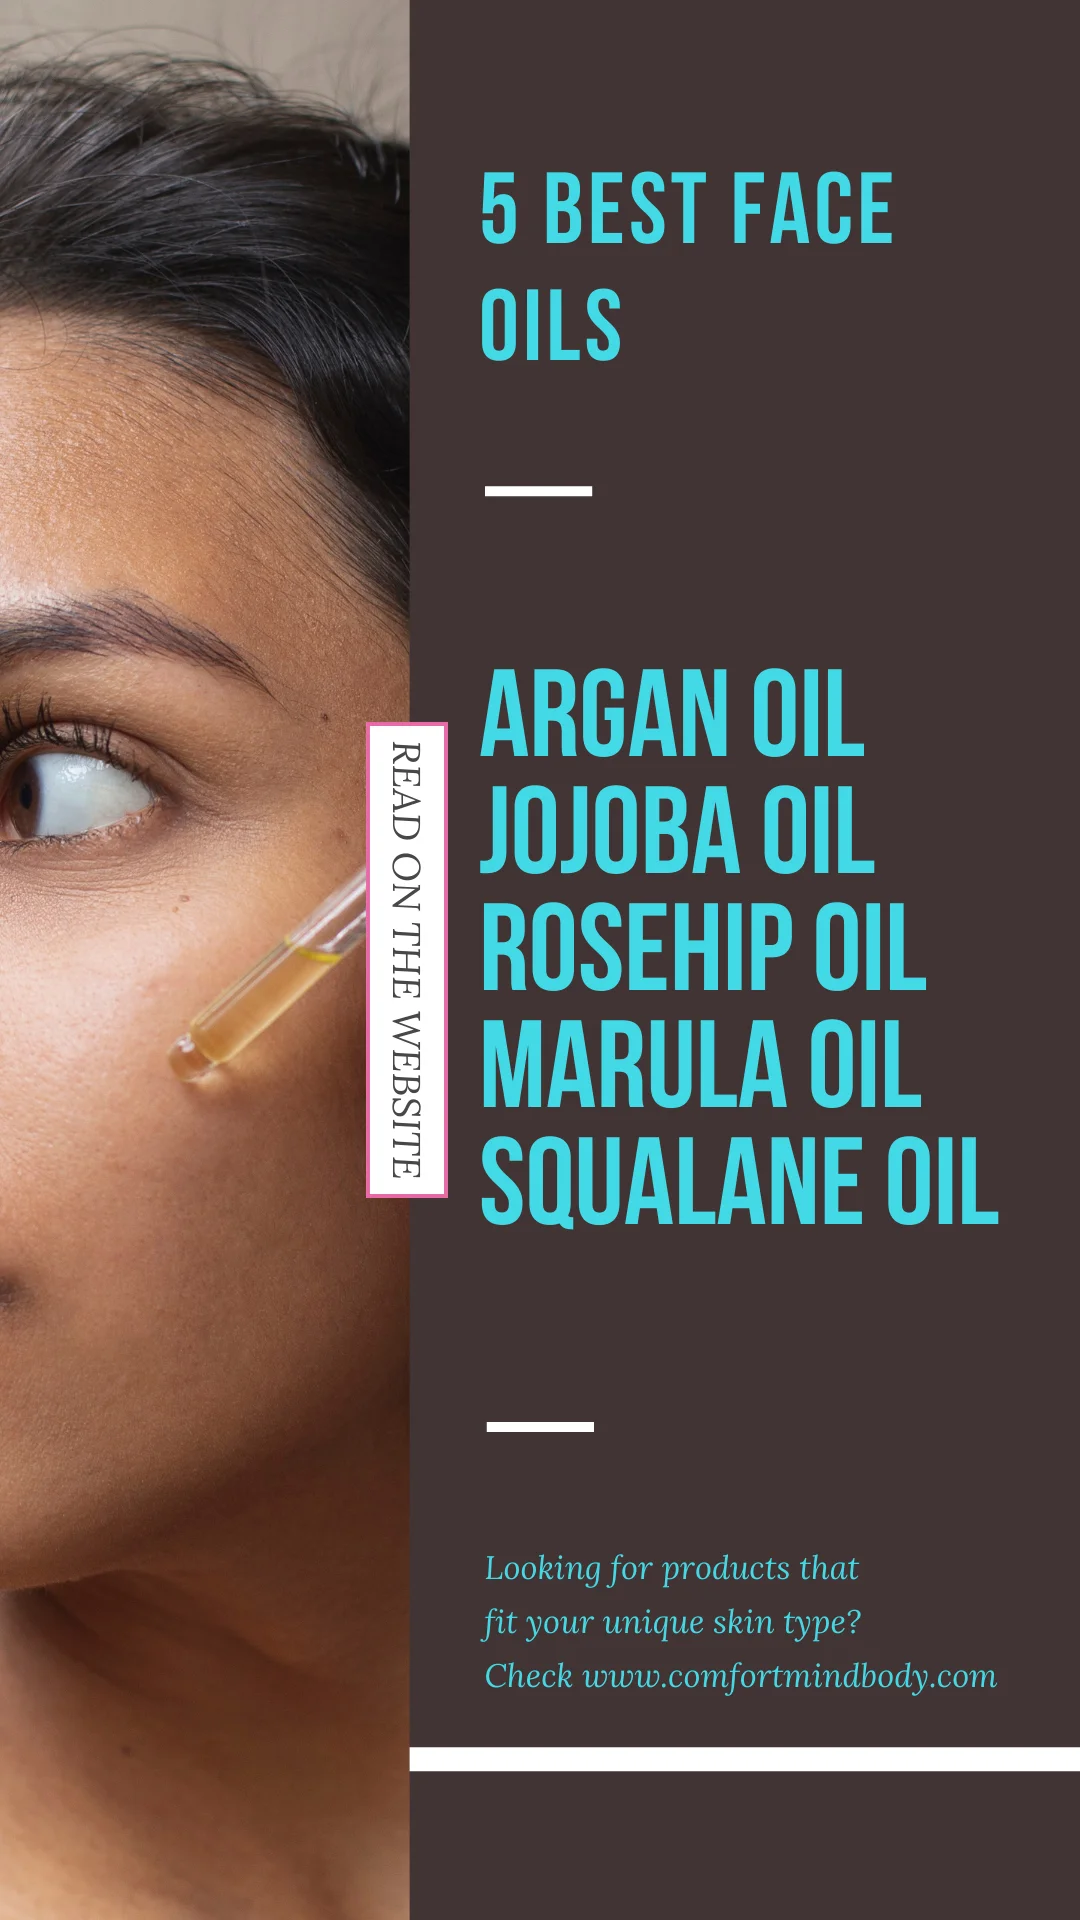 5 best face oils